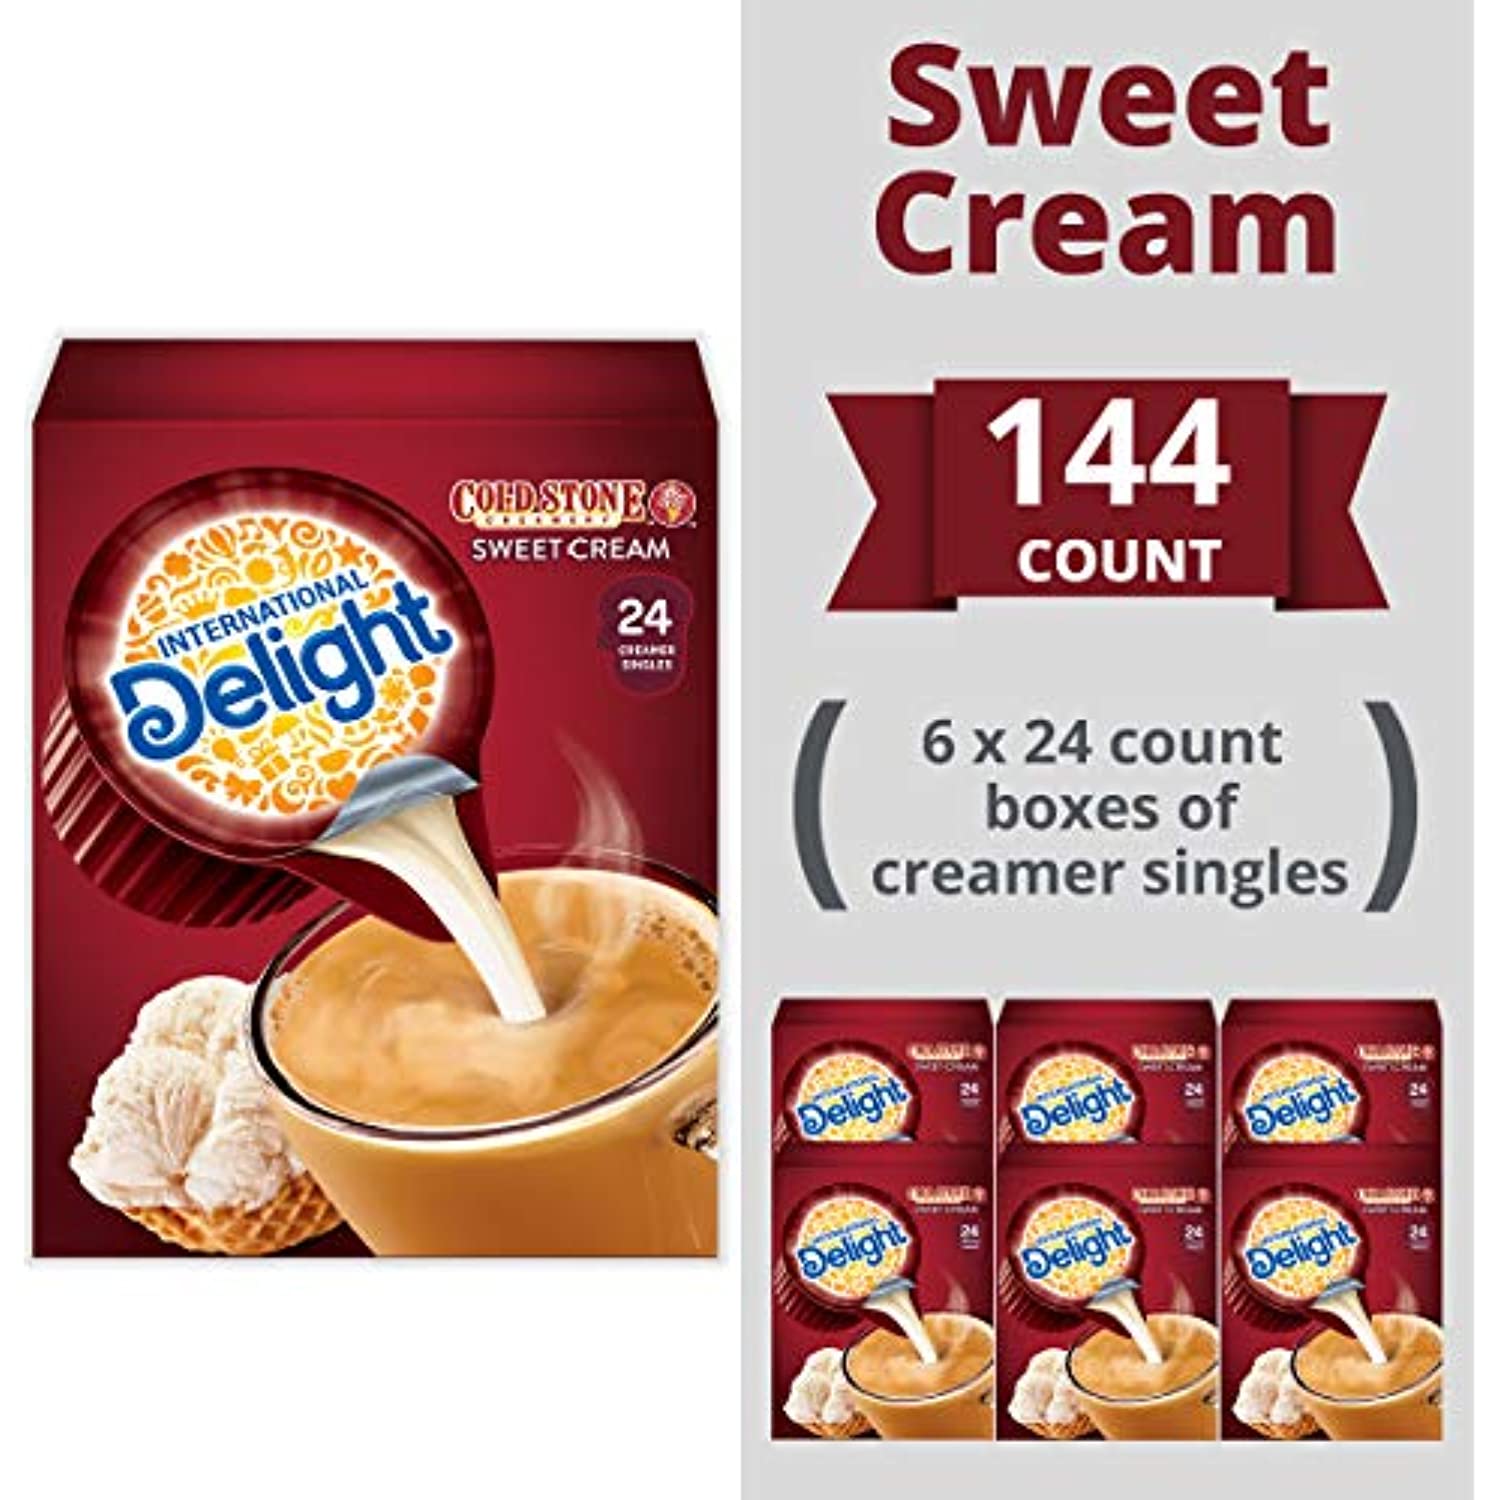 International Delight Coffee Creamer Singles Cold Stone Creamery Sweet Cream 144 Count Pack